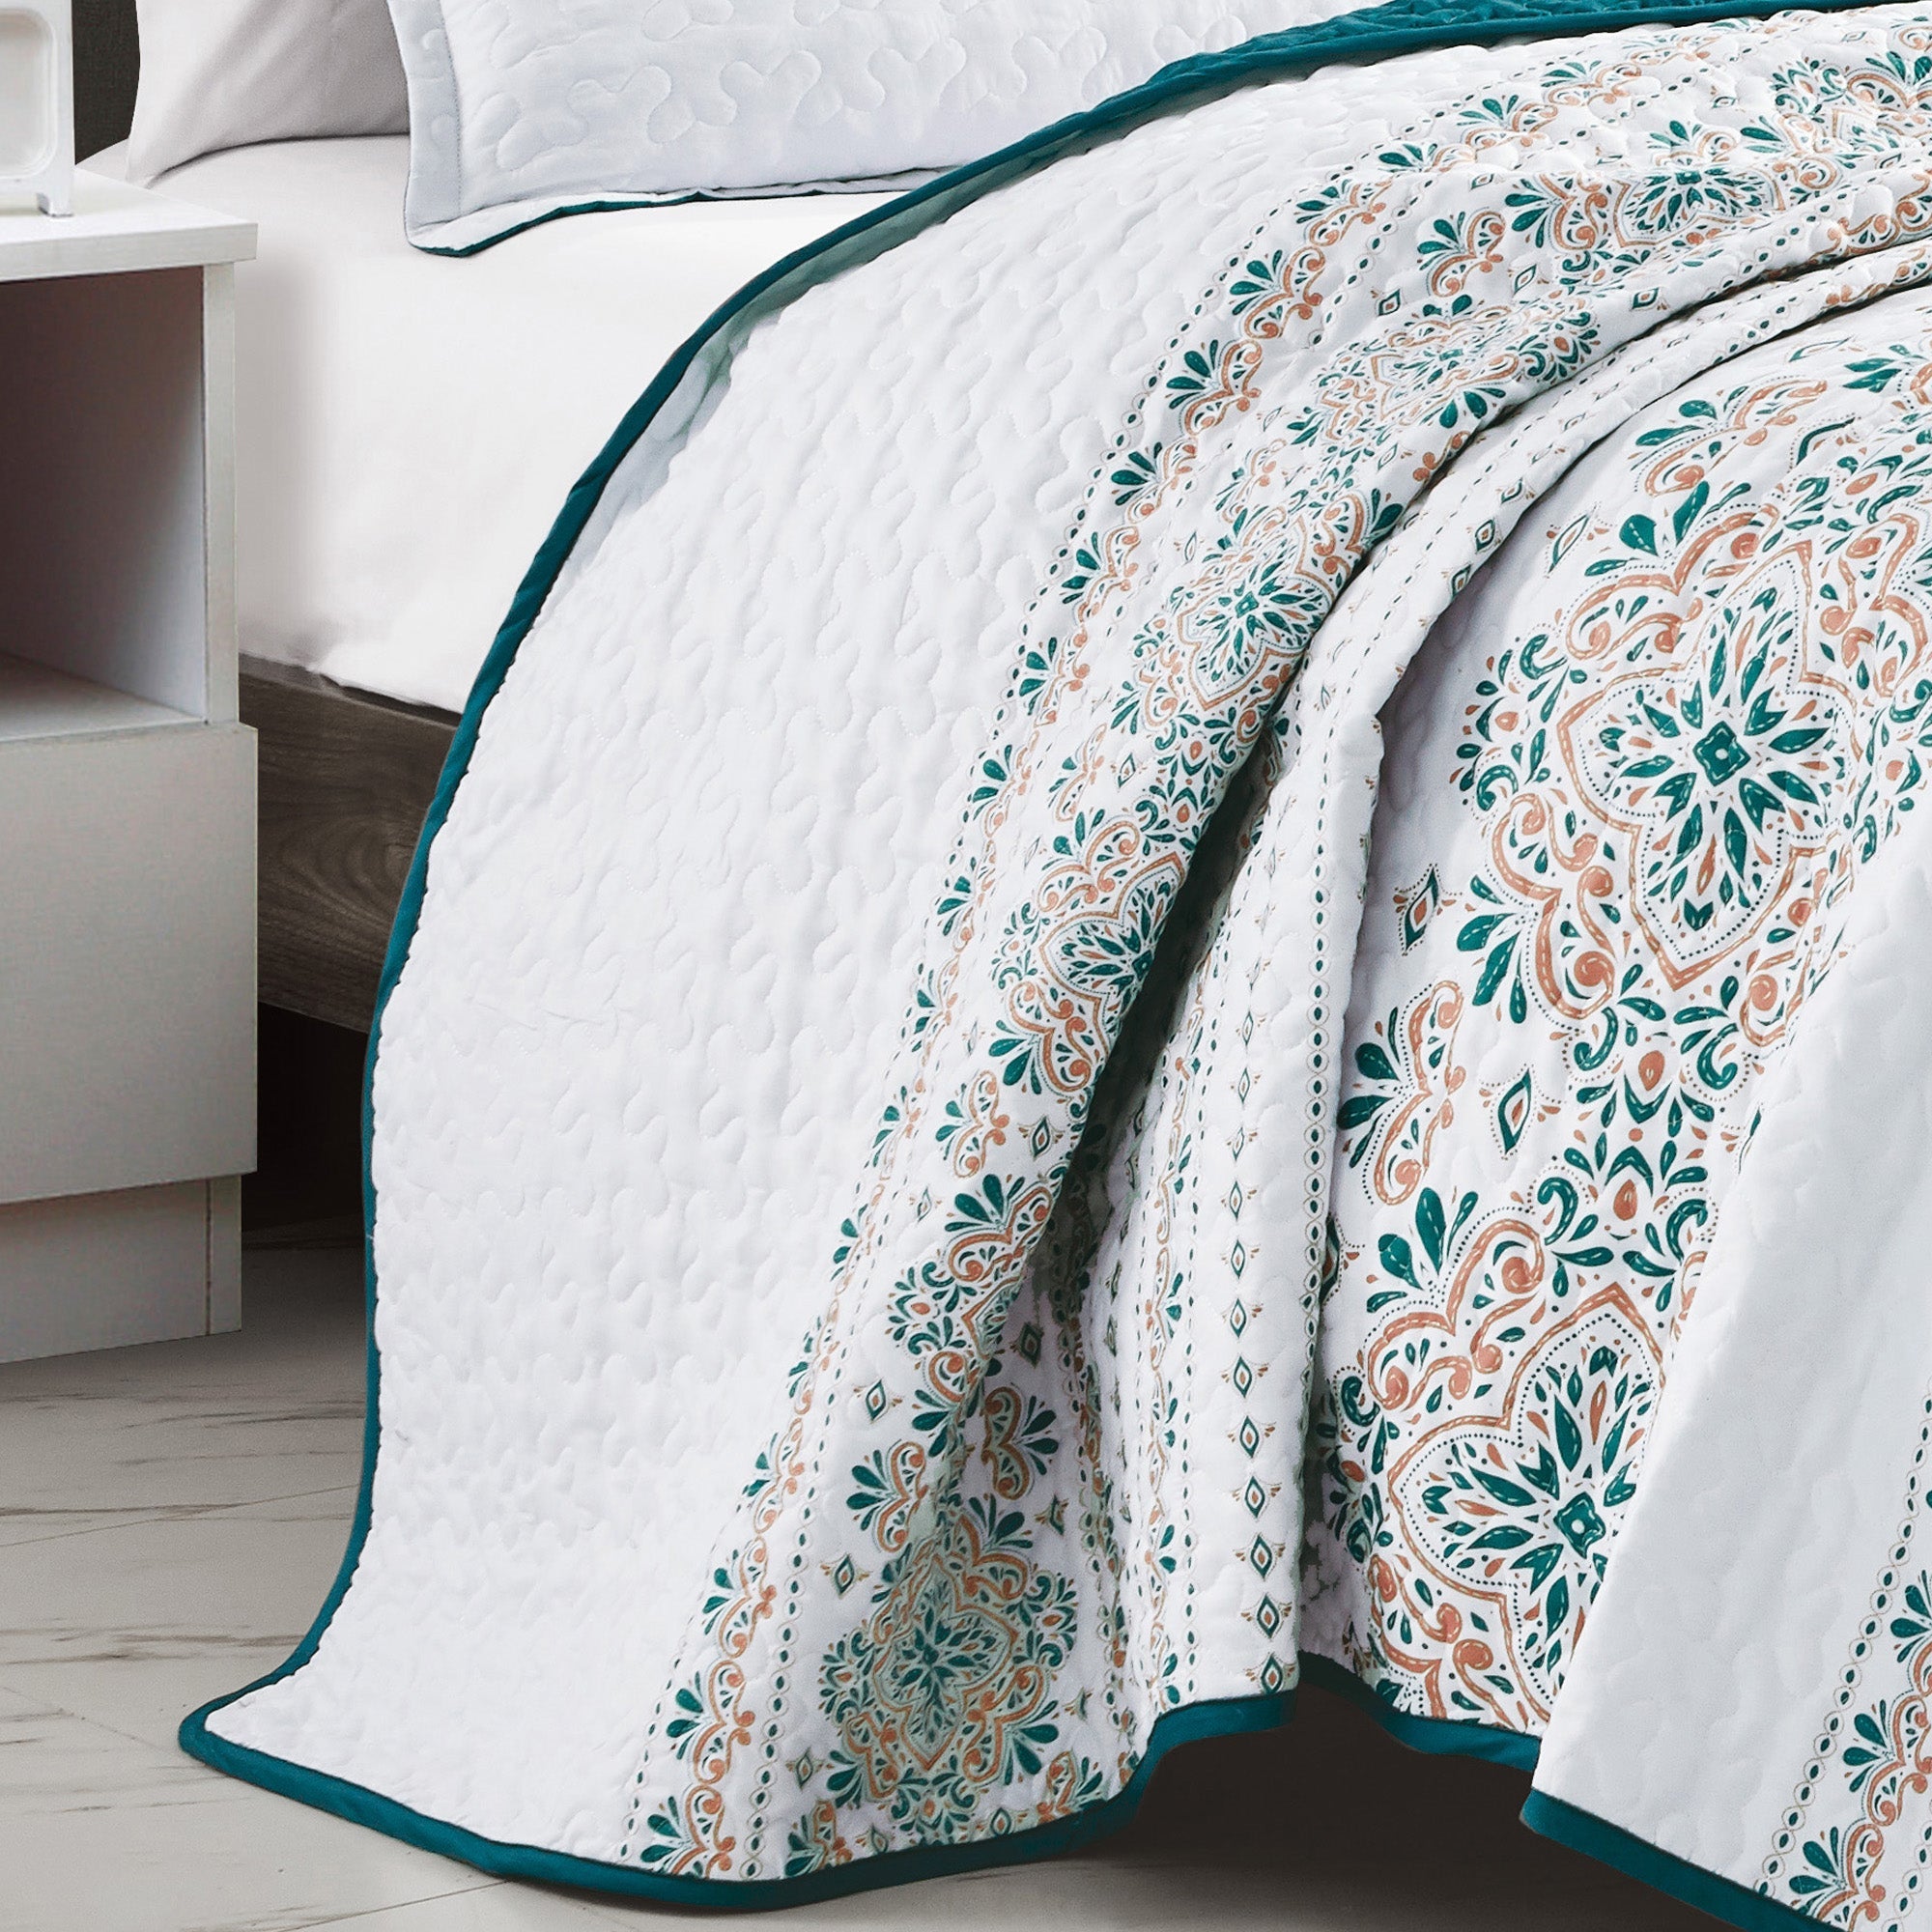 Layla White Jacquard Turquoise Quilt - 3 Piece Set - Quilts 